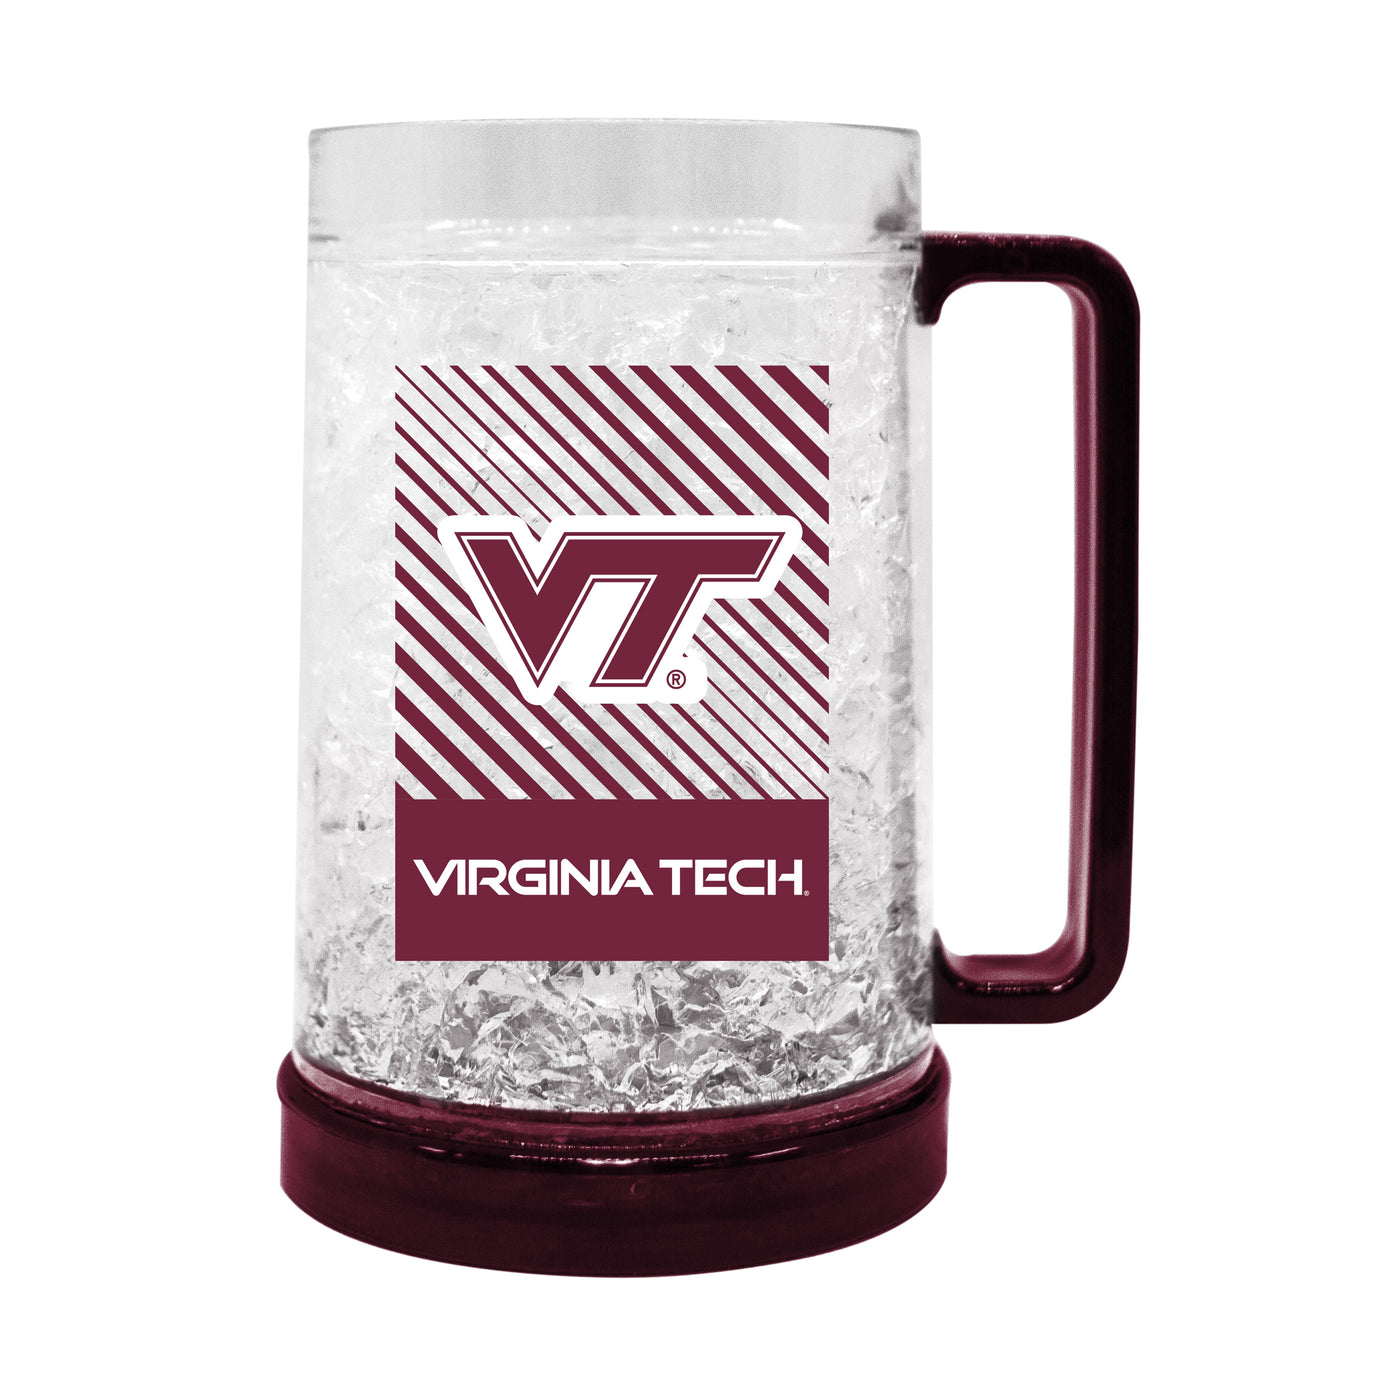 Virginia Tech Freezer Mug